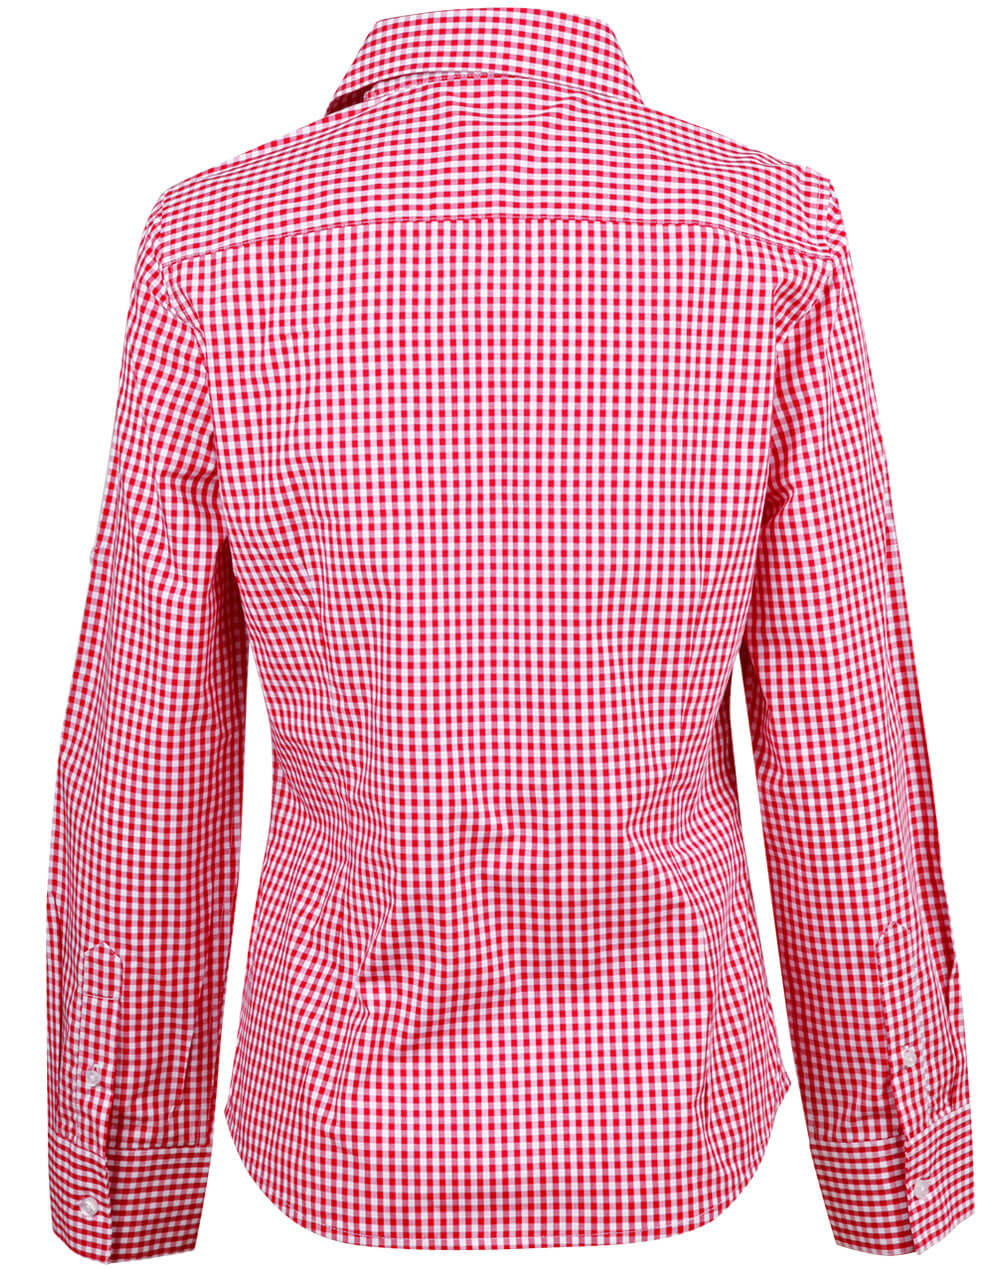 M8300L Ladies’ Gingham Check Long Sleeve Shirt